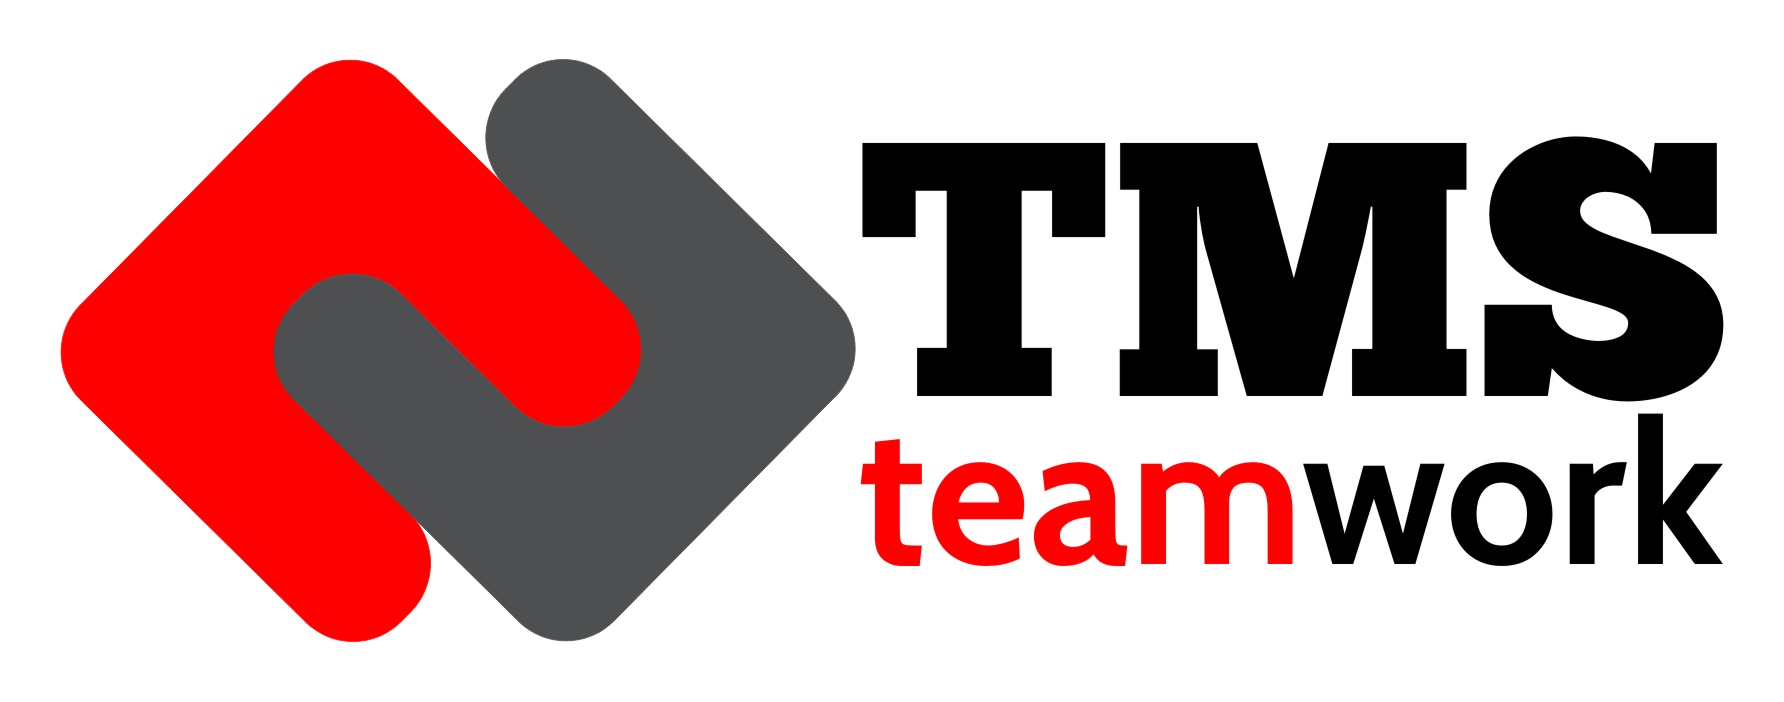 TMS Teamwork Management Services 